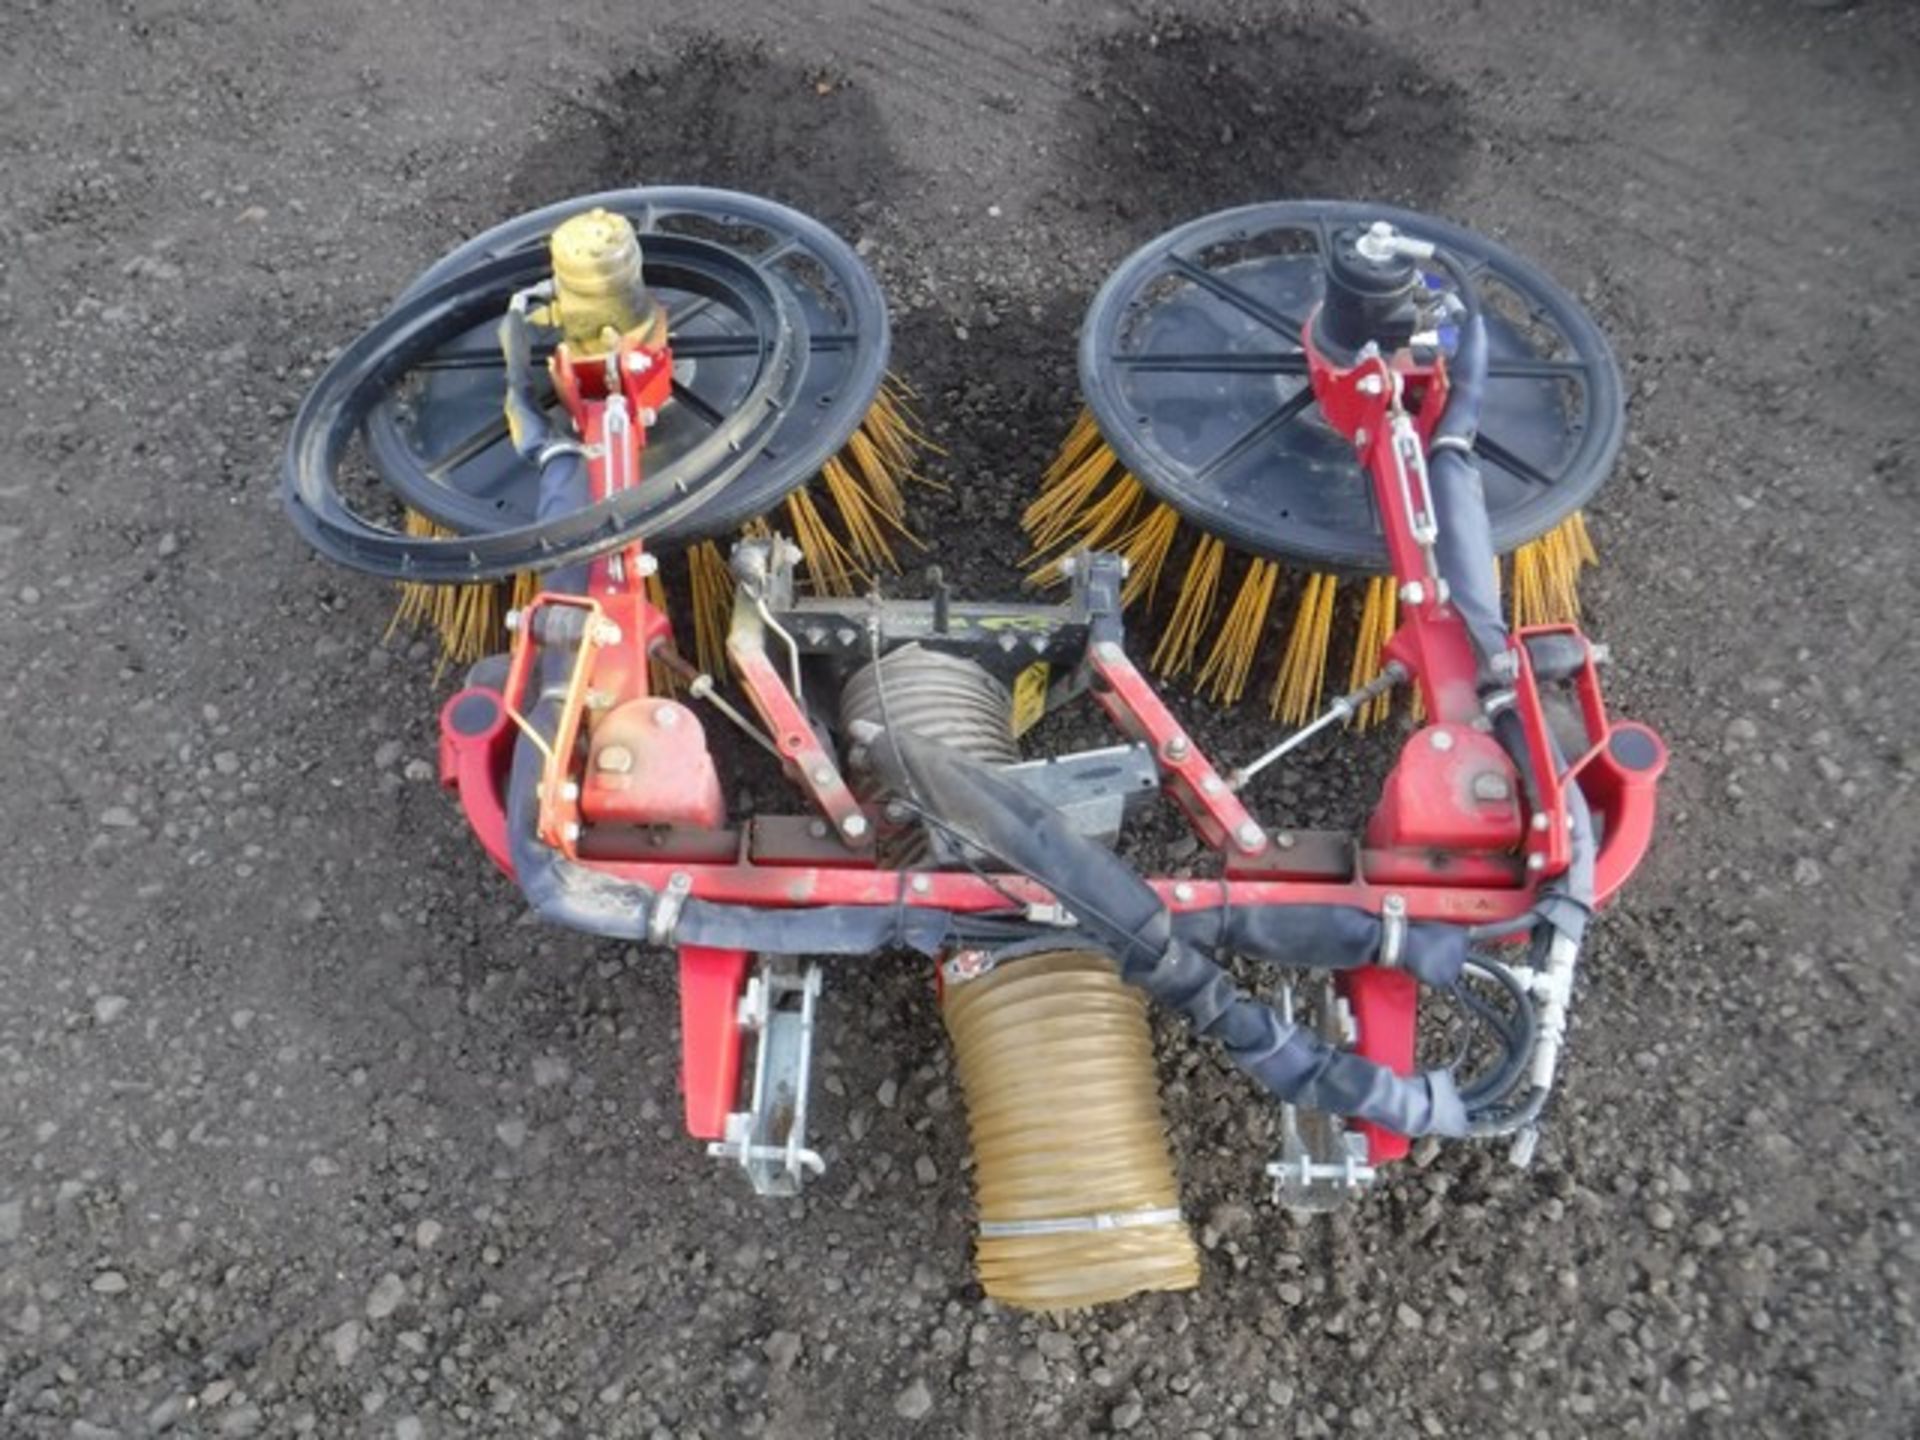 2015 LINAK sweeper attachment for Ferrari mower - Image 2 of 3